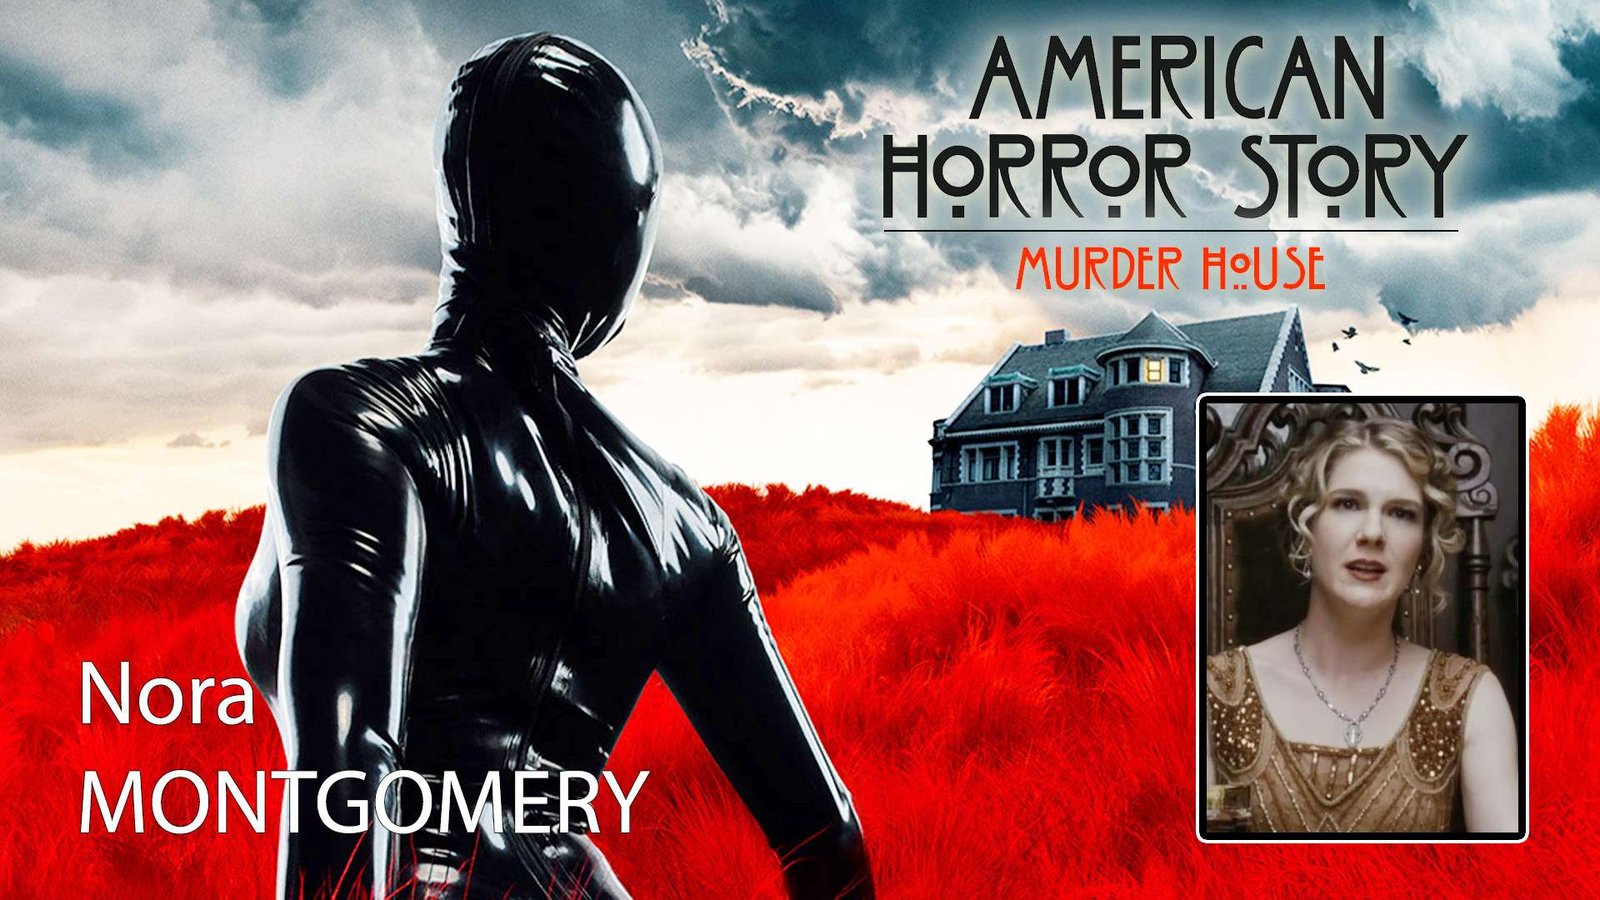 Nora Montgomery Personnage Serie Ahs 1 Murder House